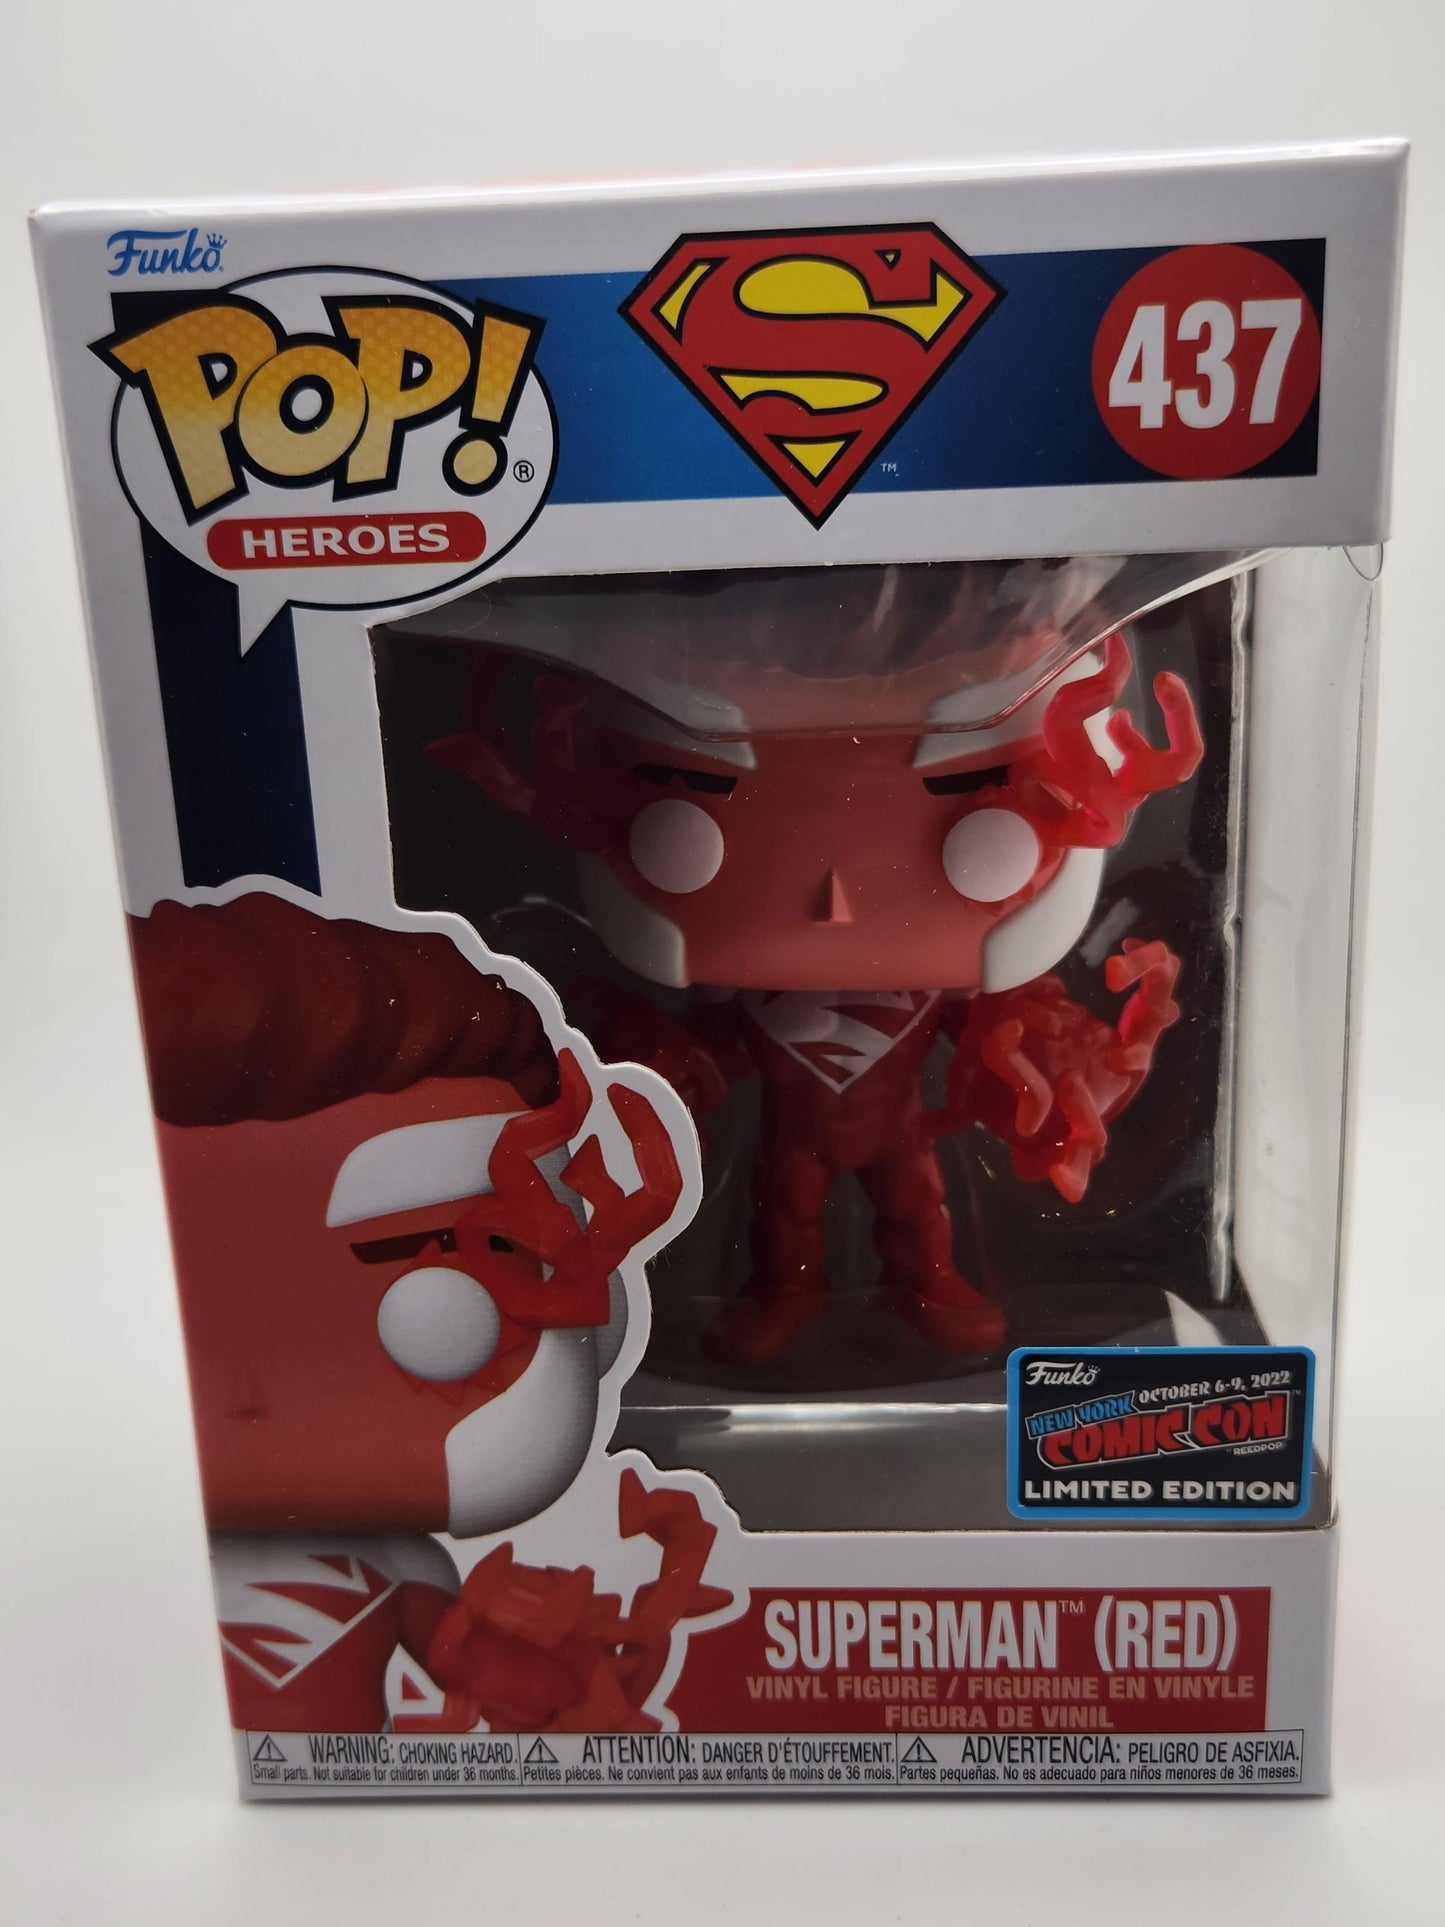 Superman (Red) - #437 - Box Condition 9/10